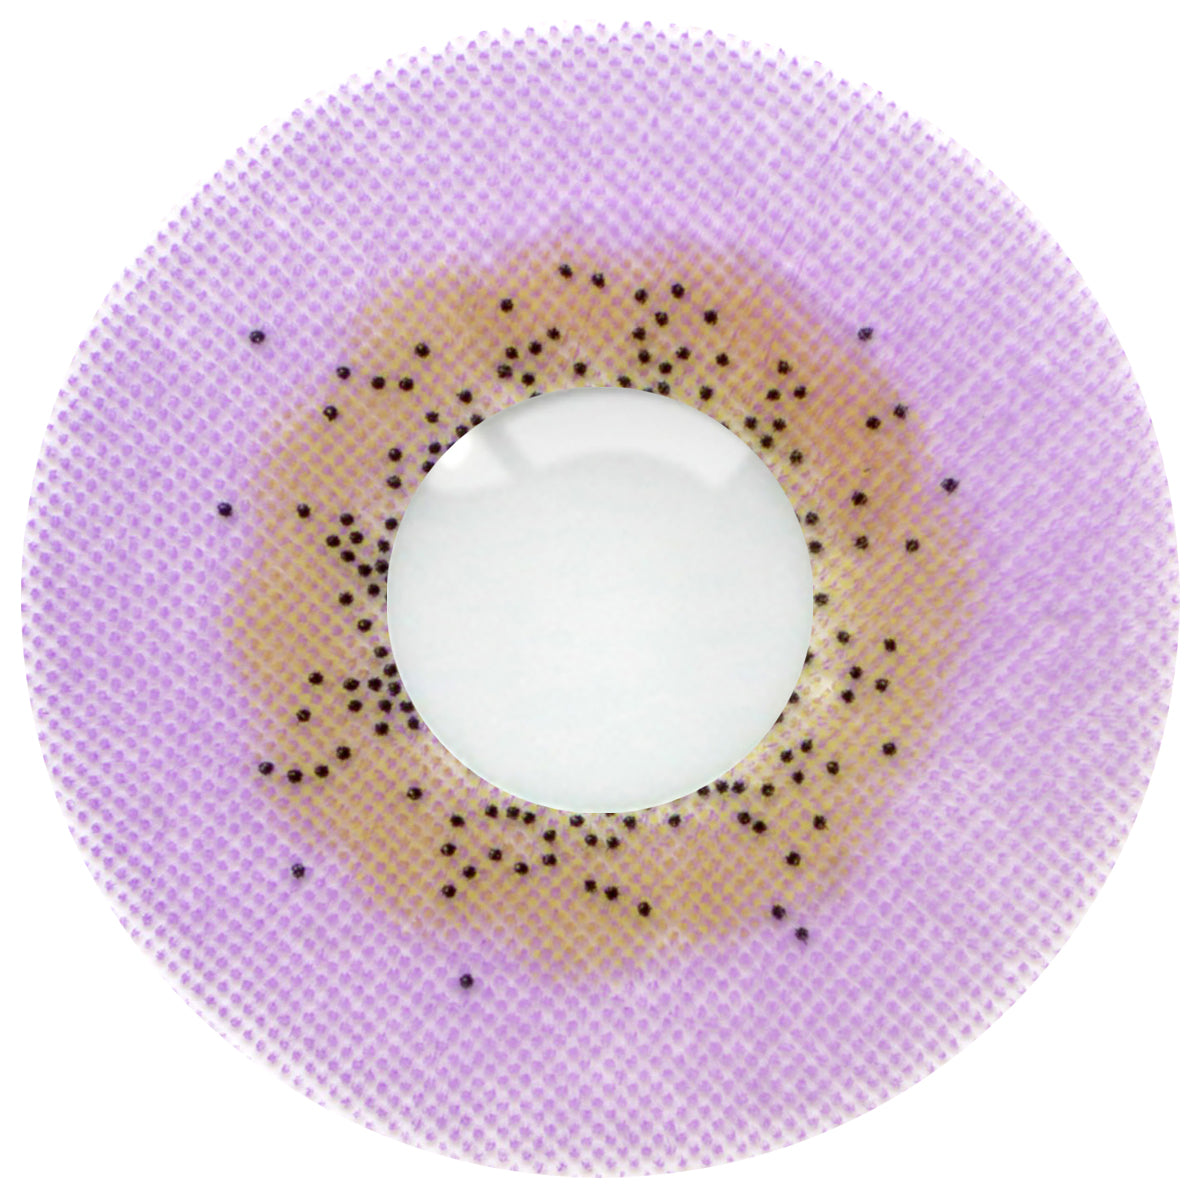 Loox Silken Violet Purple Cosmetic Contact Lenses, FDA & Health Canada Cleared